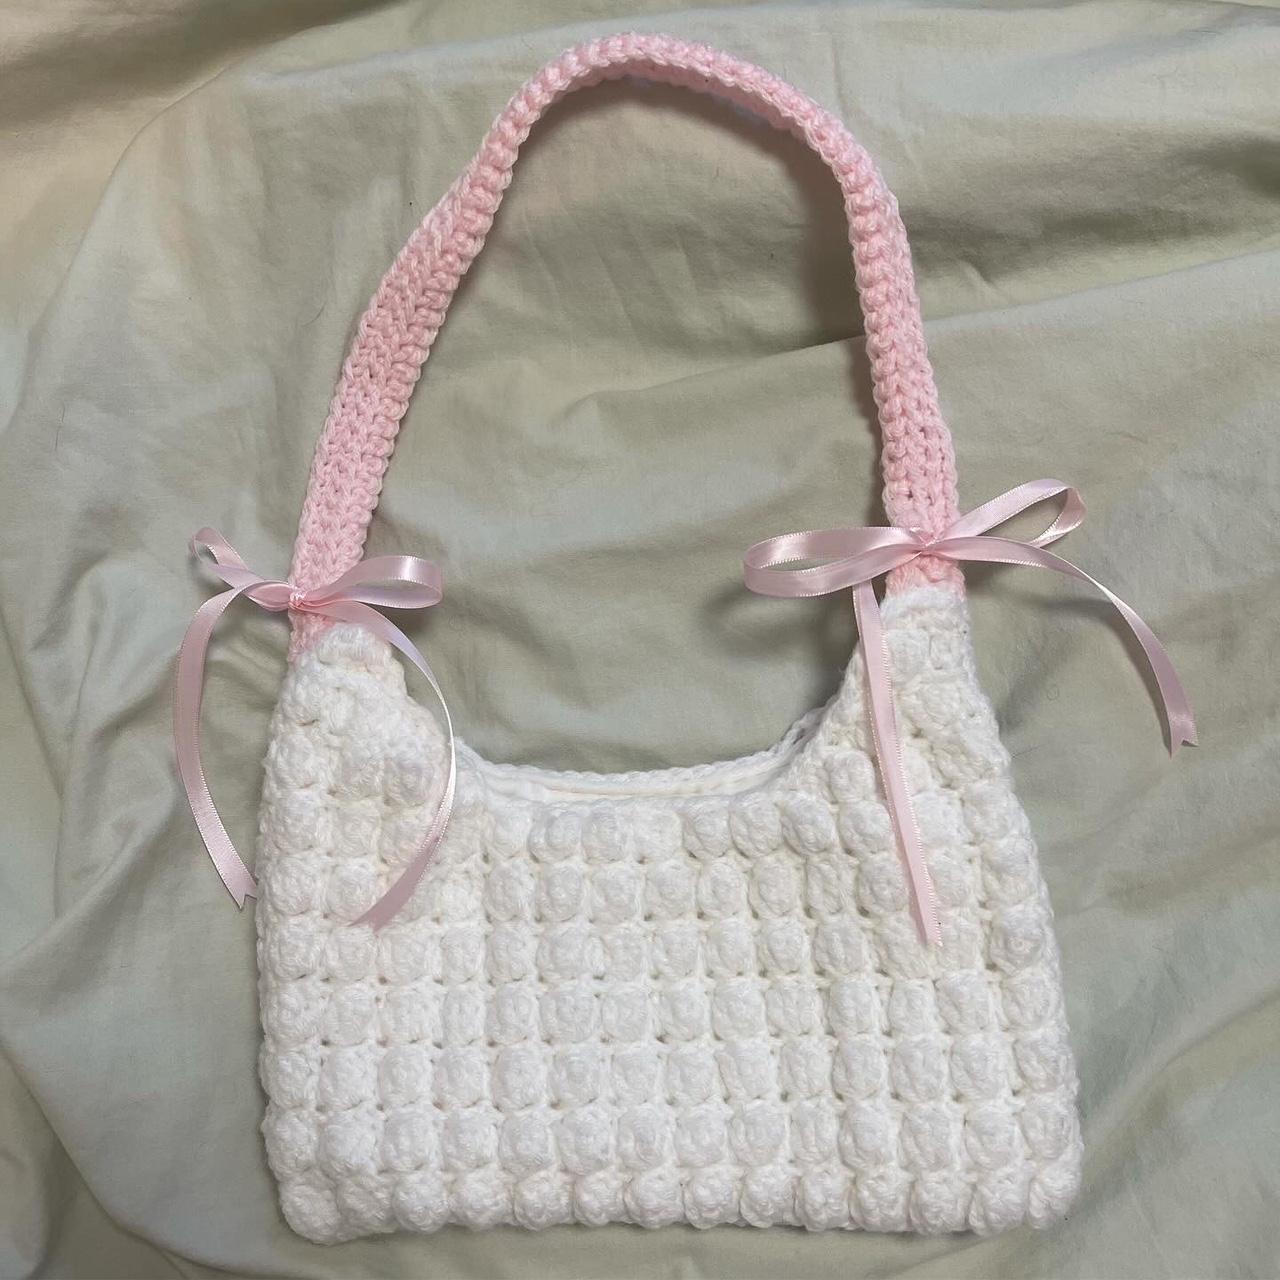 Ideas for a funny crochet purse? : r/crochet